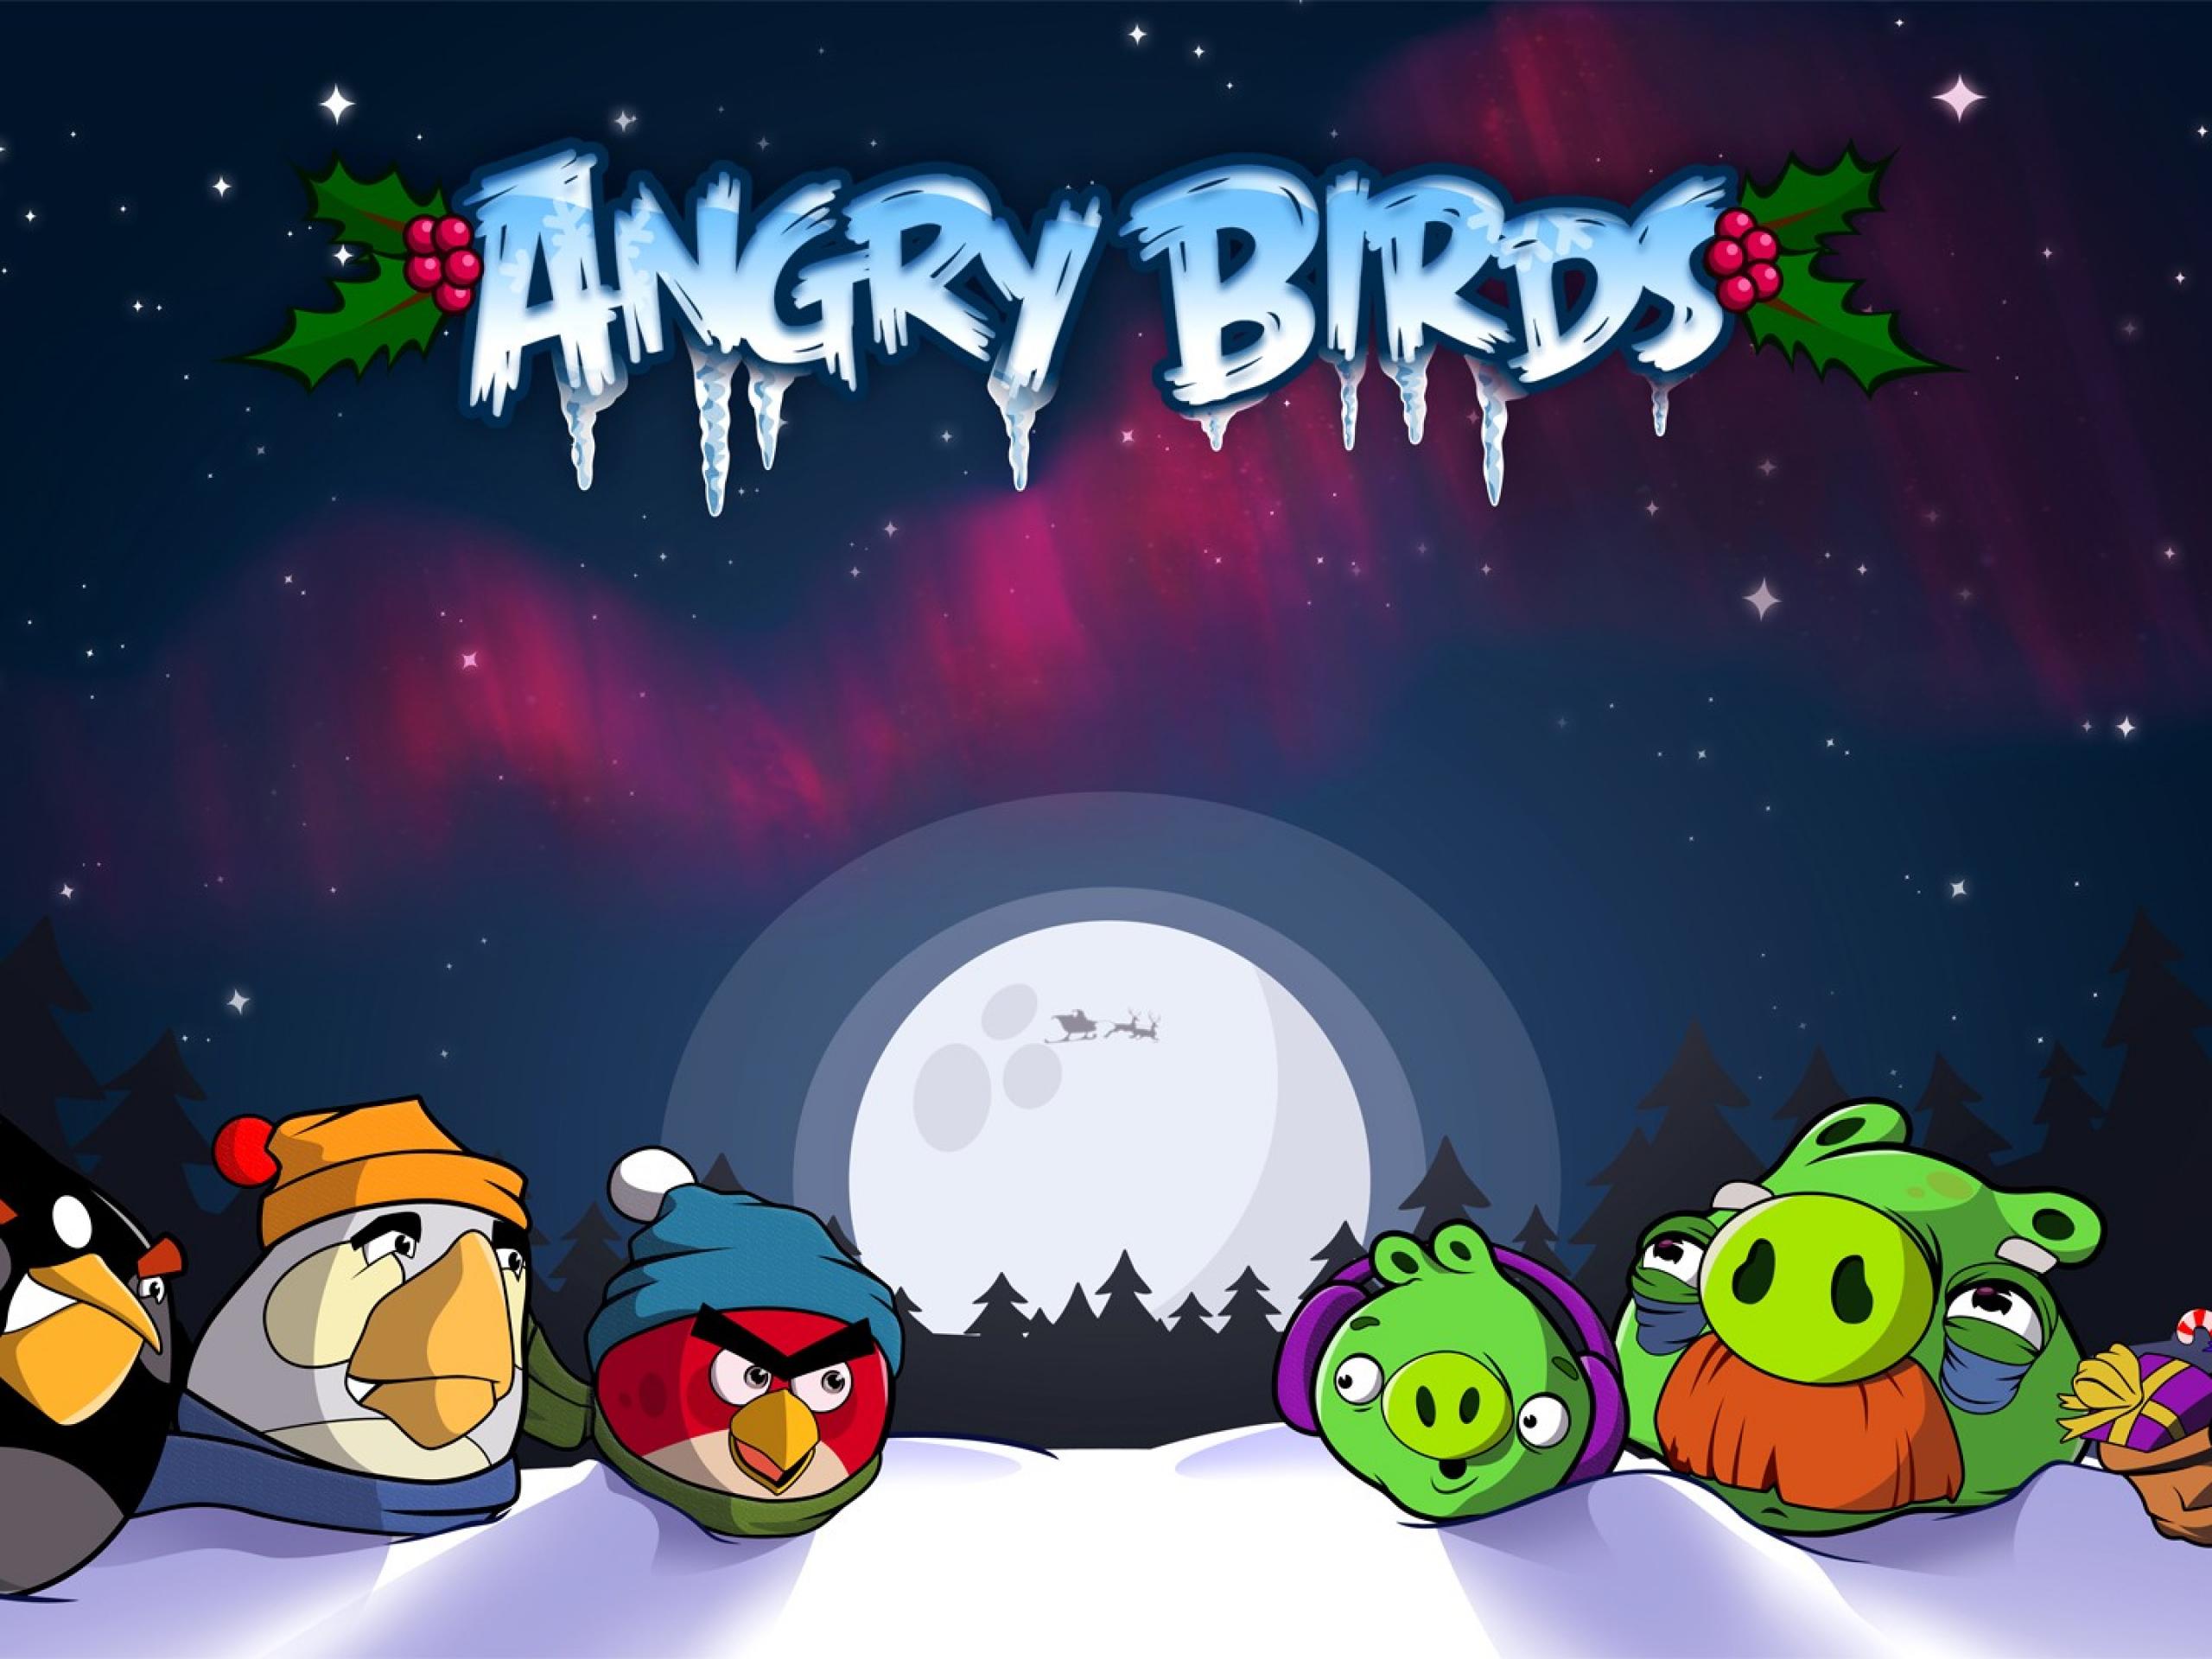 Angry Birds Seasons Hi Wallpapers 2014 |